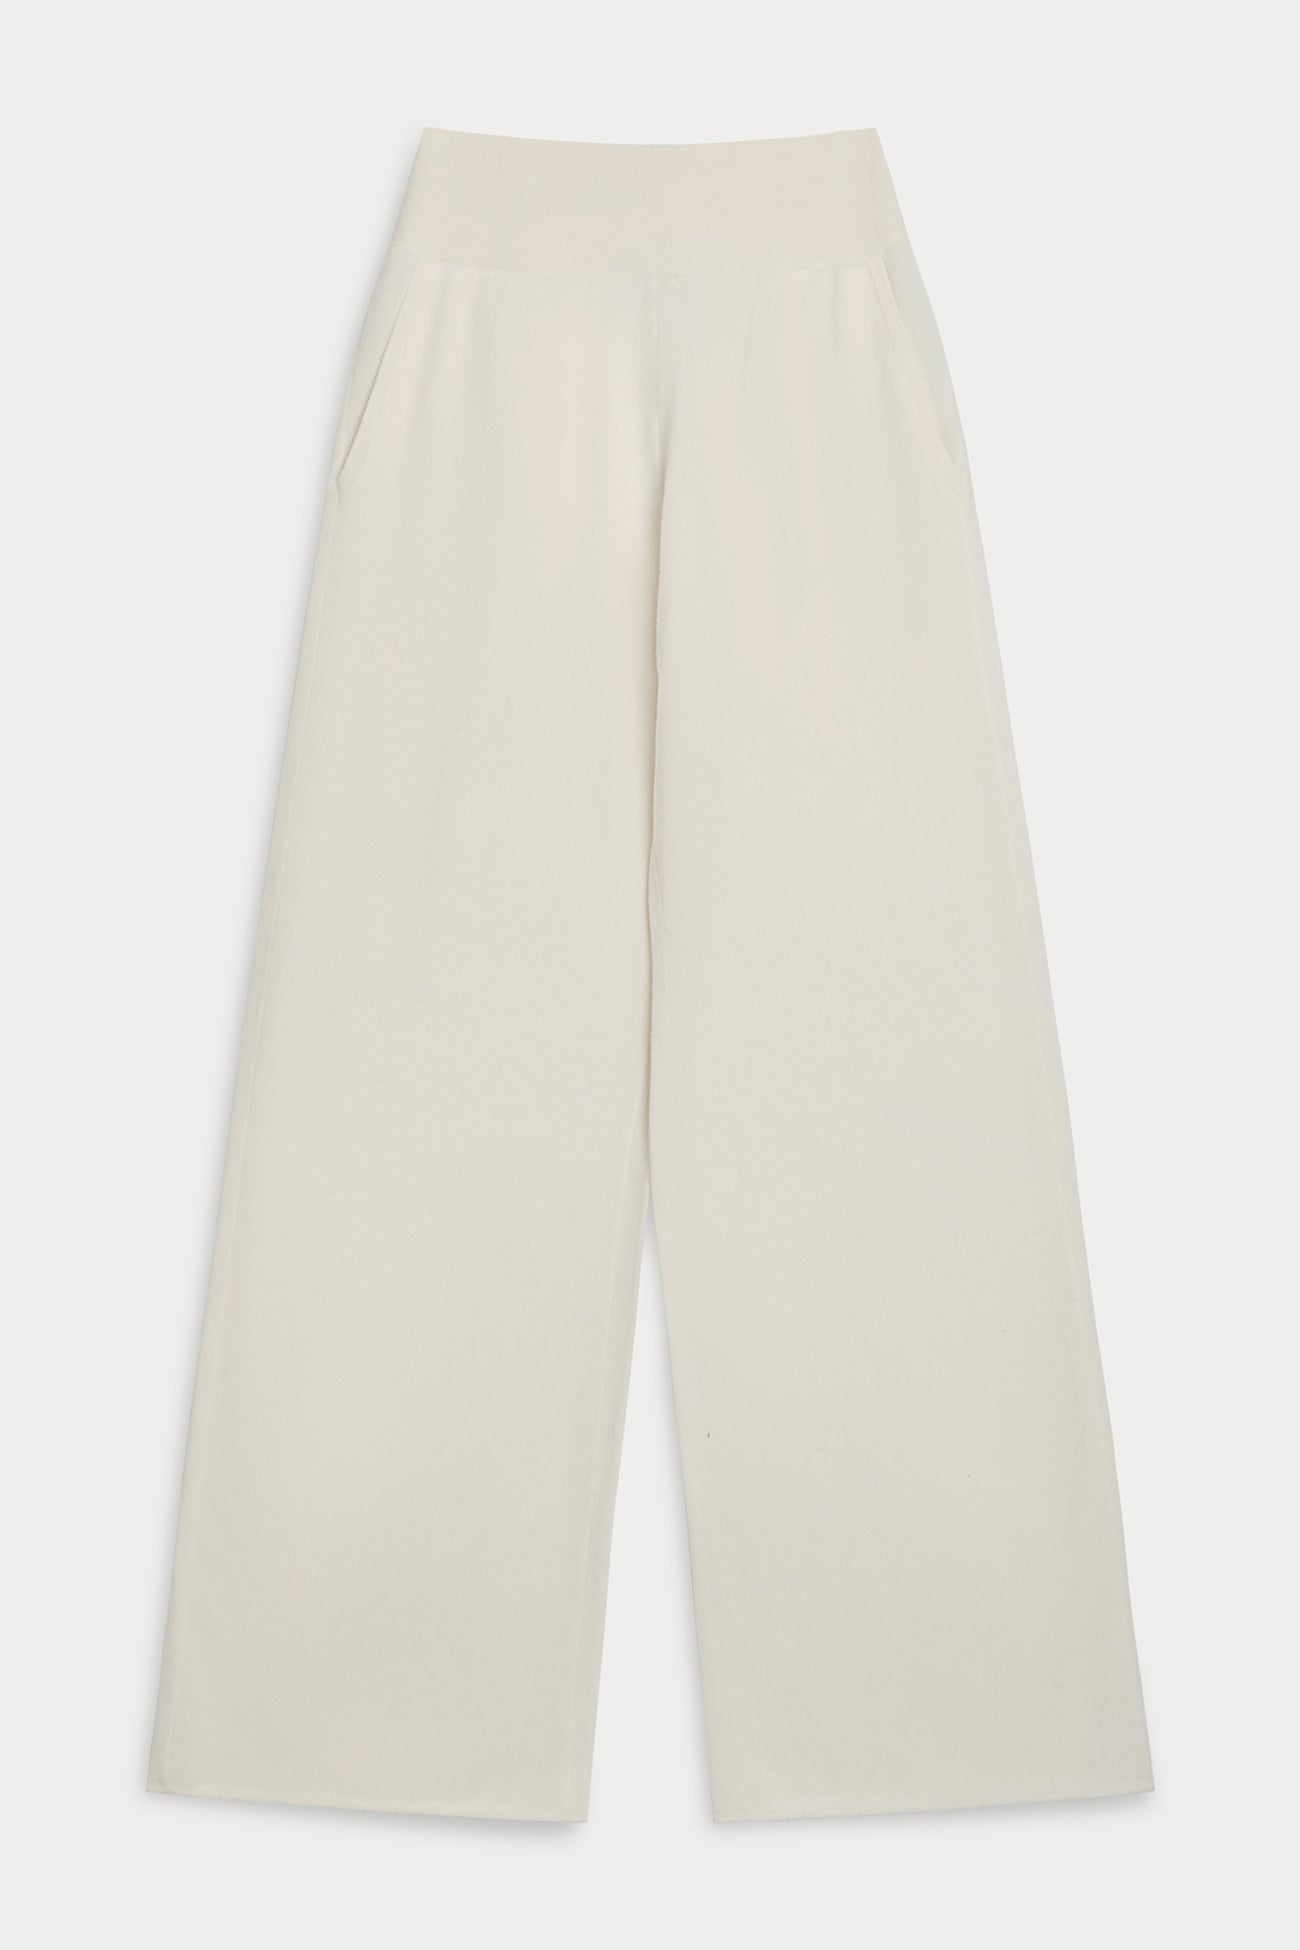 ATTYYWS New Hot Sale 100% Pure Cashmere Ladies Wide Leg Pants Long